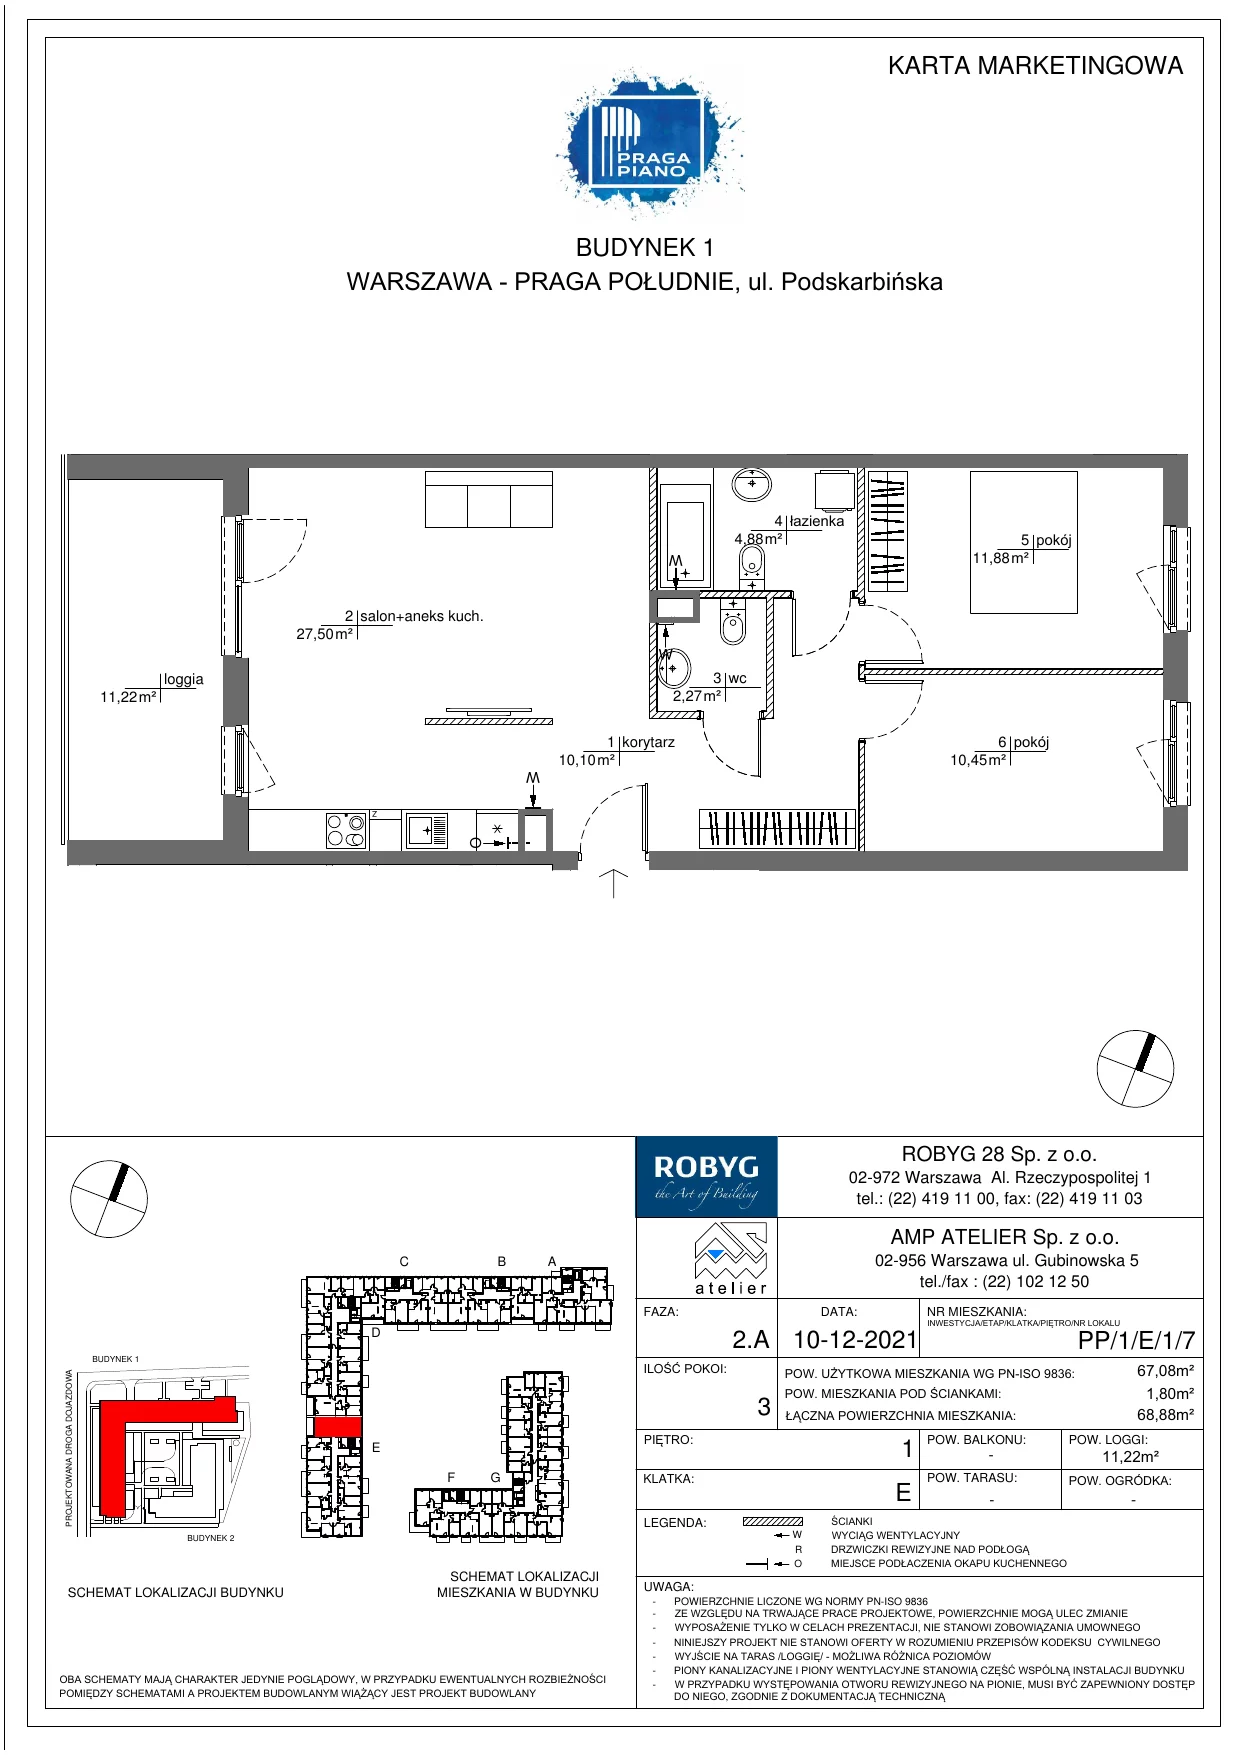 Mieszkanie 67,08 m², piętro 1, oferta nr PP/1/E/1/7, Praga Piano, Warszawa, Praga Południe, Kamionek, ul. Podskarbińska